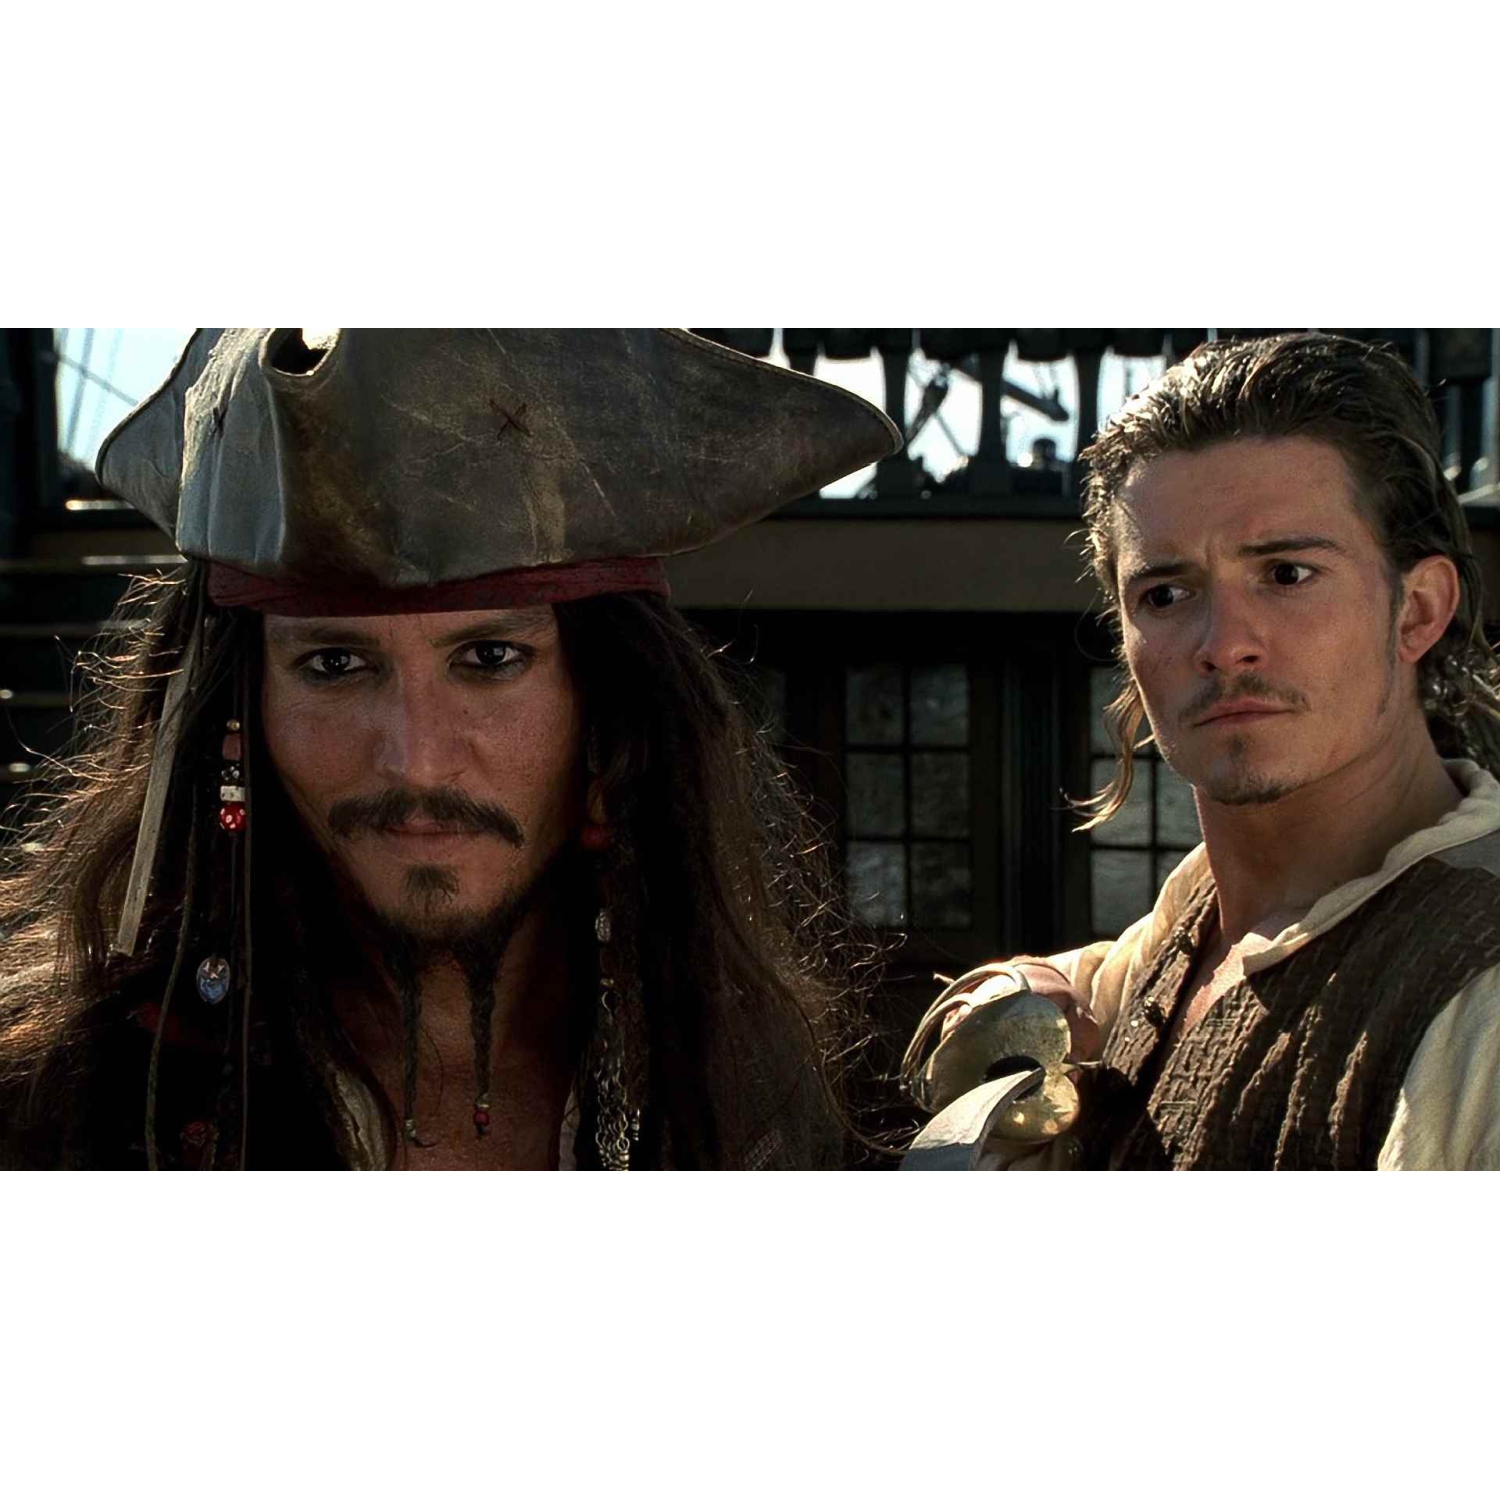 pirates of the caribbean 1 full movie english subtitles